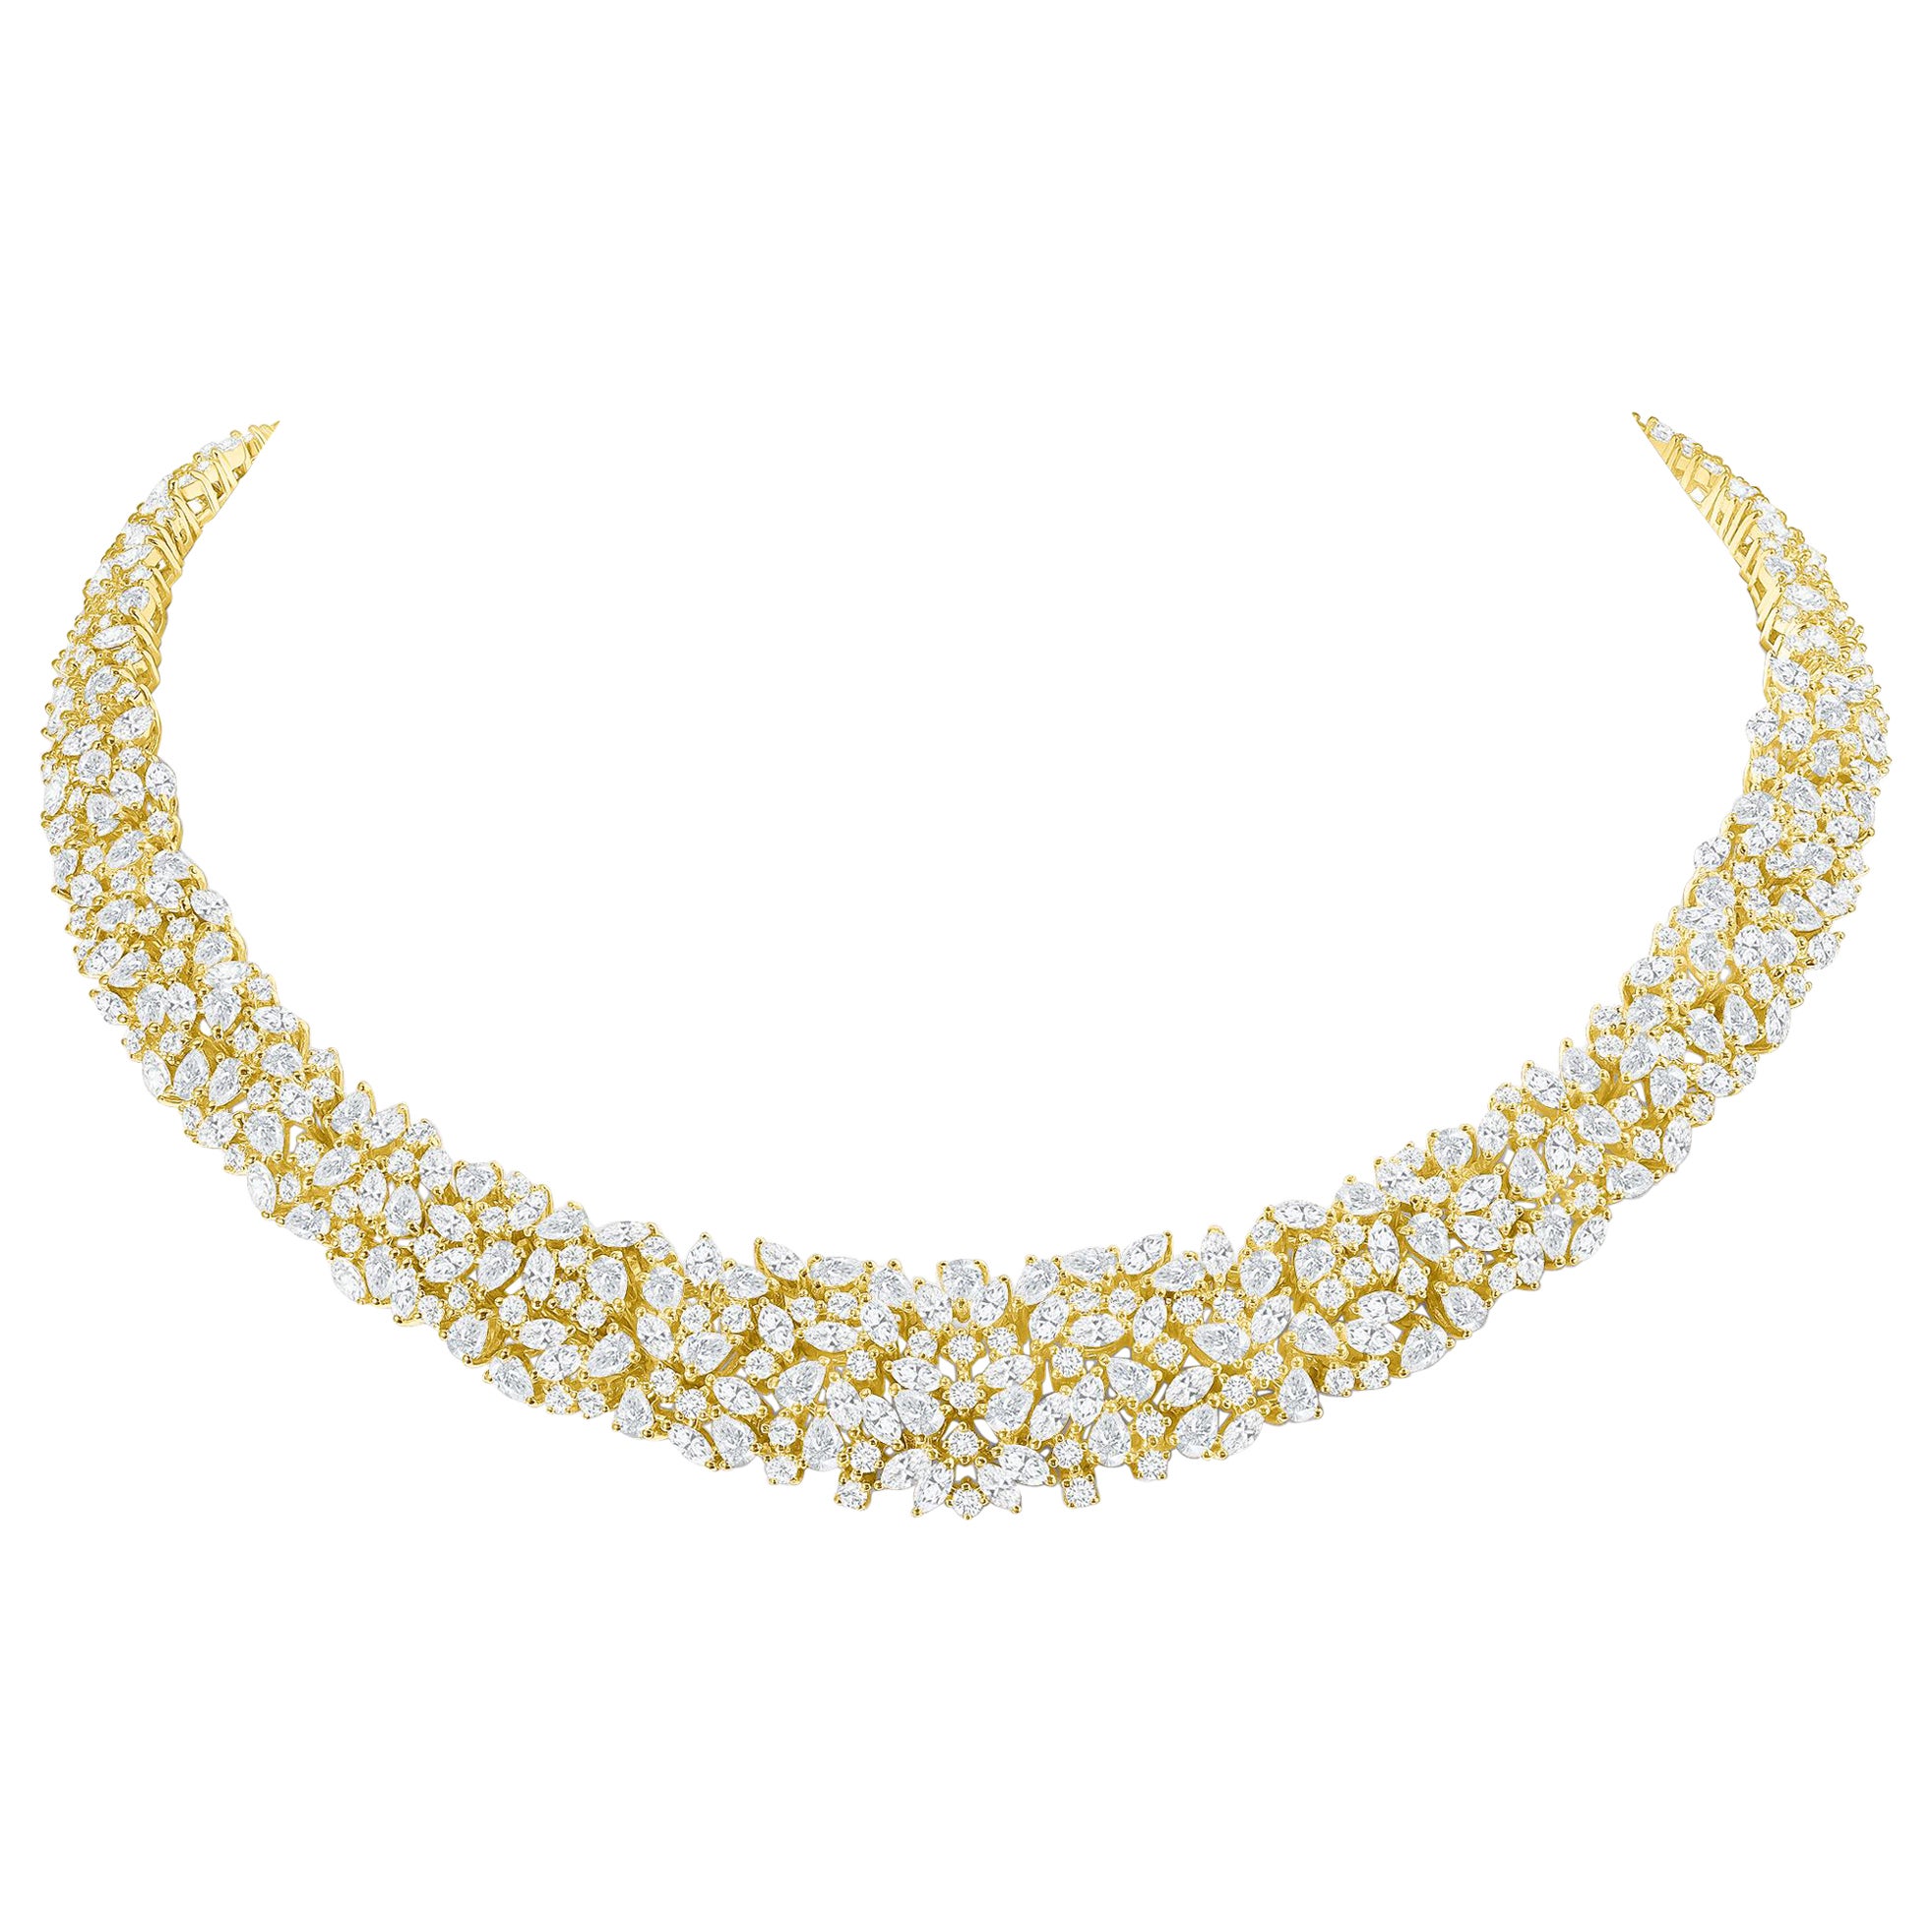 30 Carat Diamond Cluster Necklace, 18K Yellow Gold